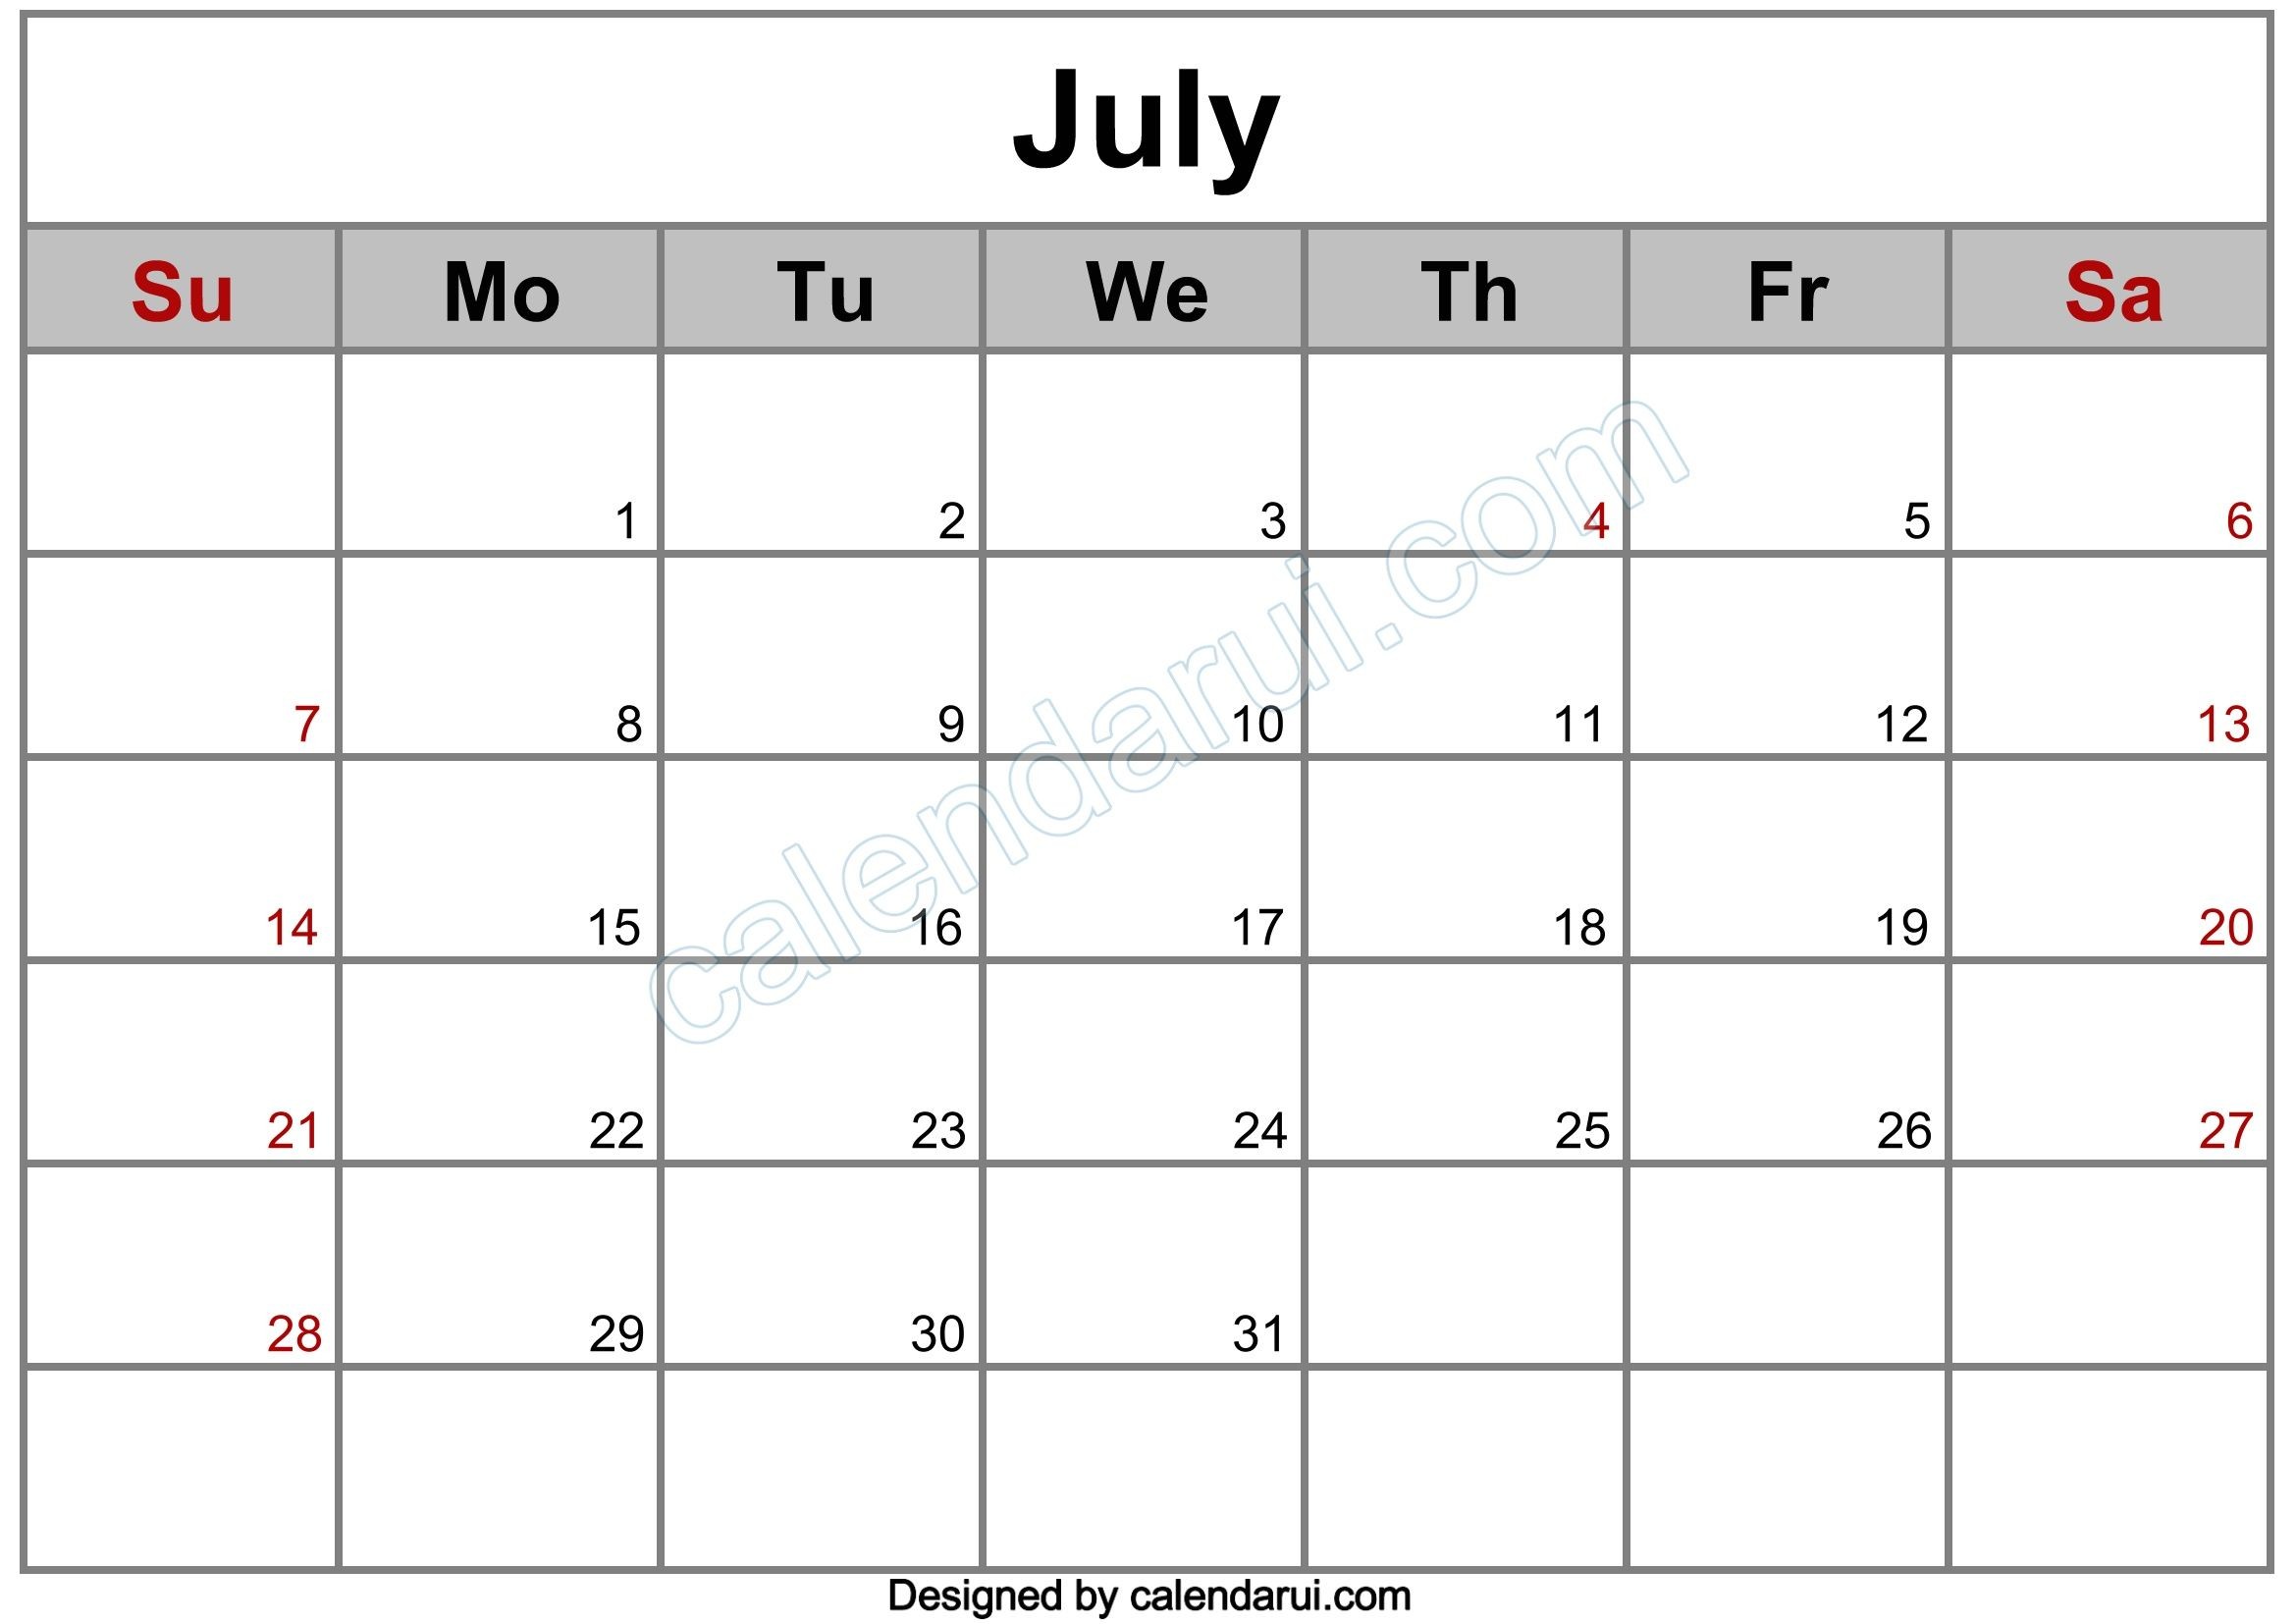 7 July Blank Calendar Template Example